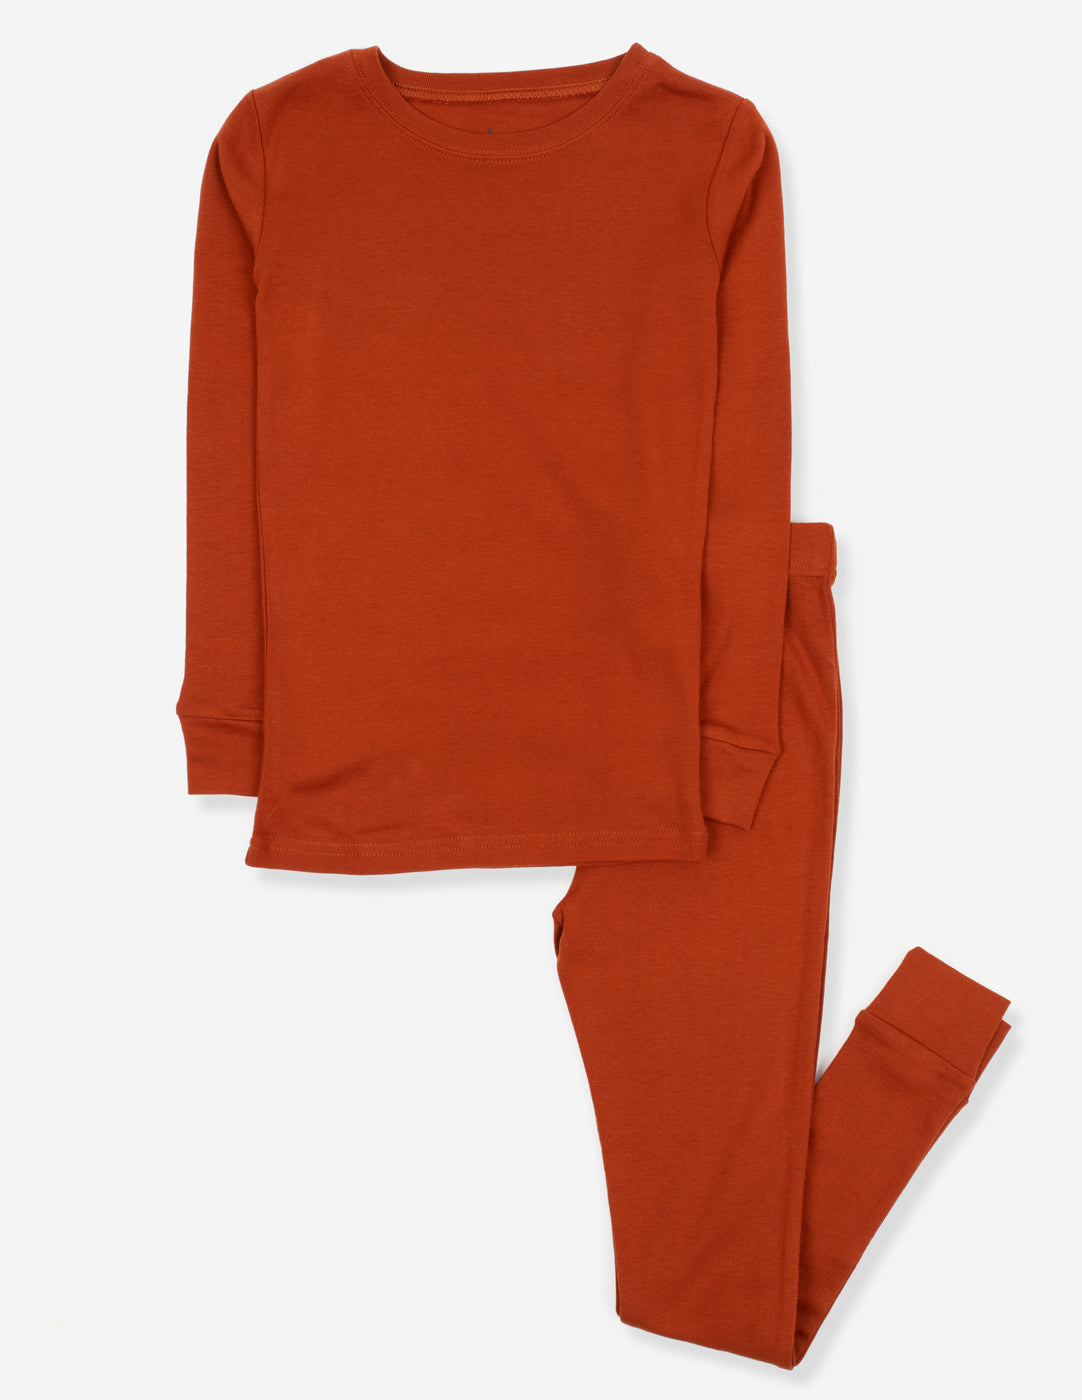 Kid's/Youth Long Sleeve Pajama Set | Orange Smilies